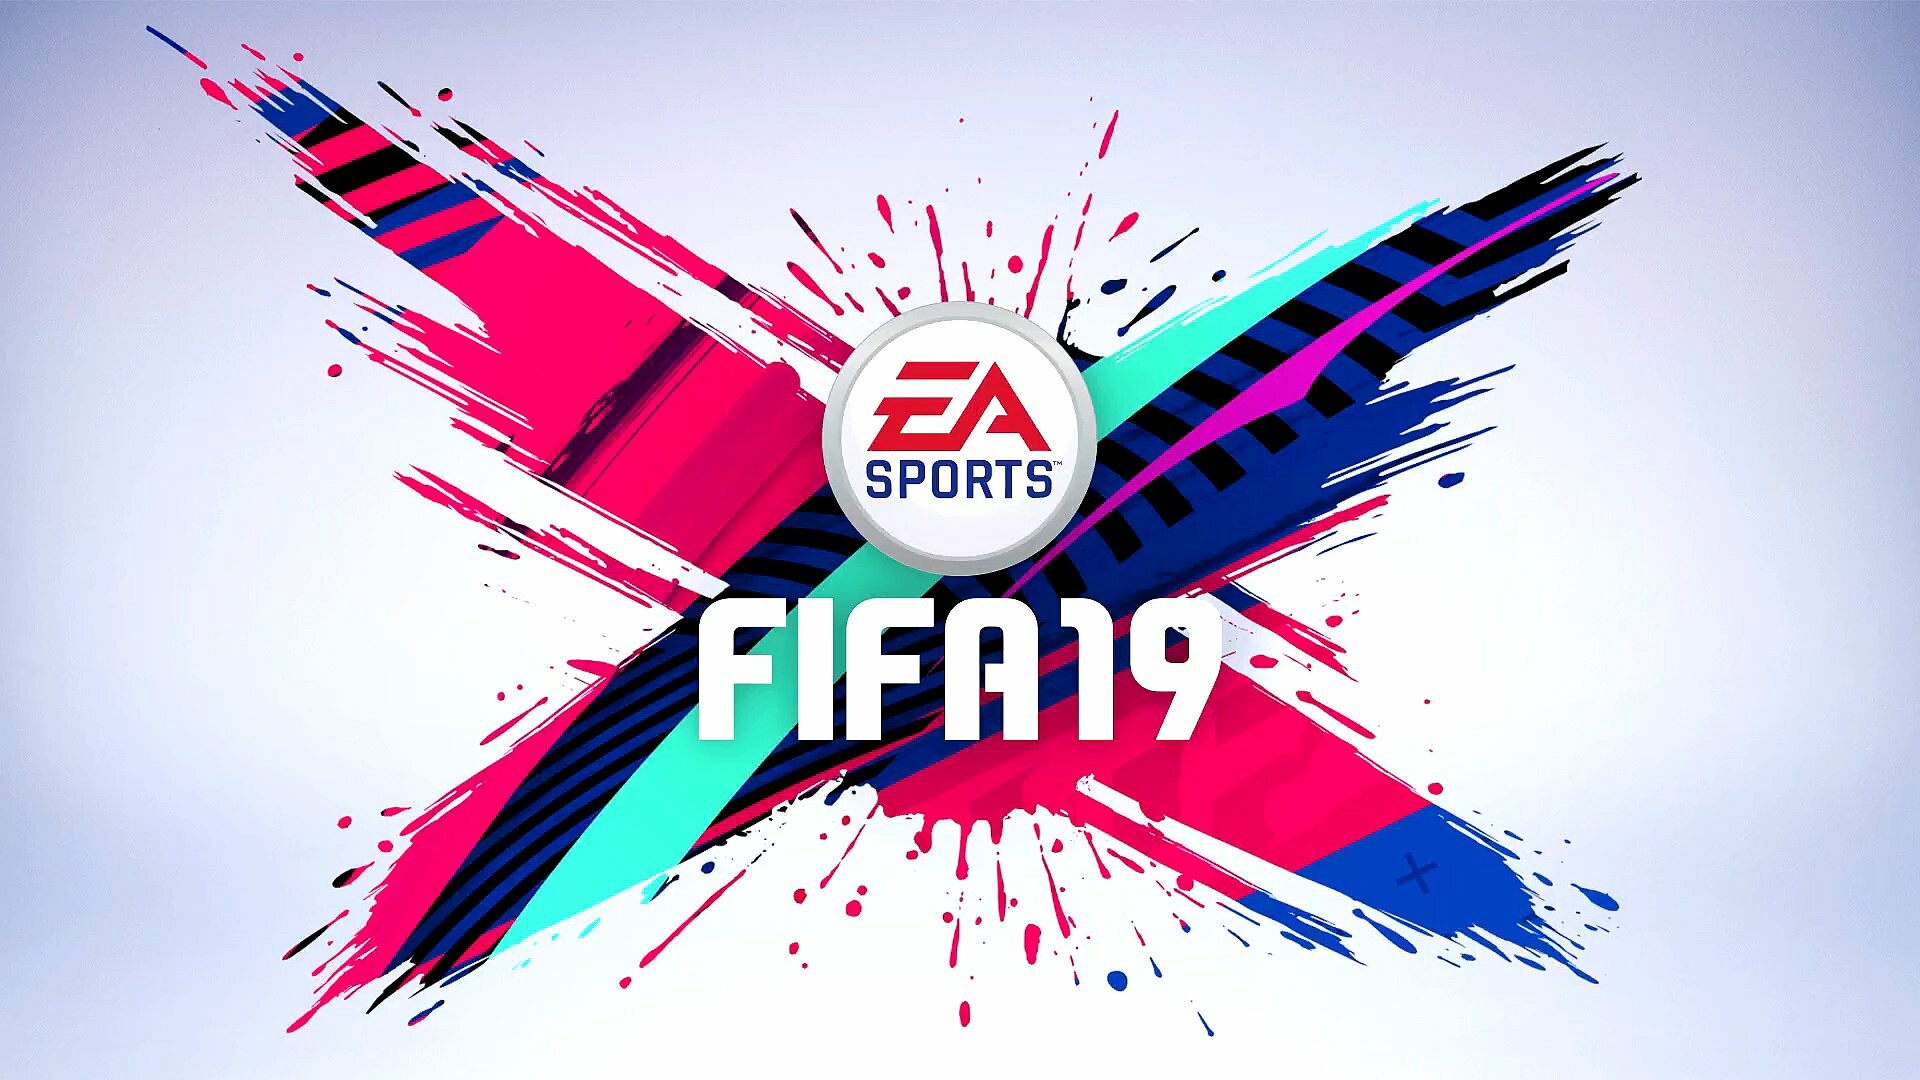 FIFA: The twenty-sixth version in the popular soccer series, EA Sports. 1920x1080 Full HD Wallpaper.